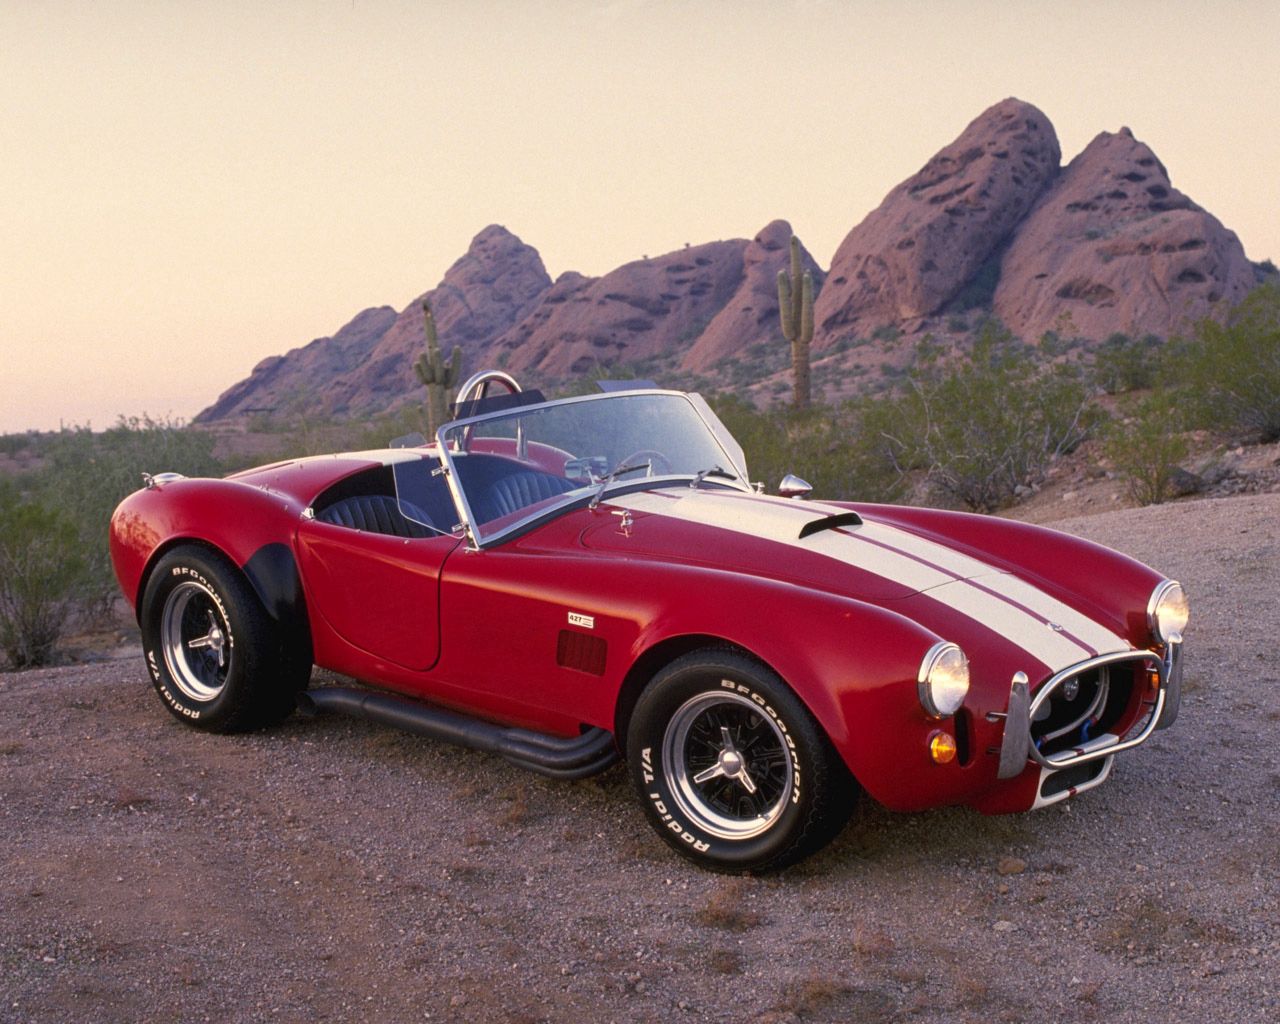 cobra, sports, desert, cars, red, car, side view, style, cabriolet, retro, 1962, ac